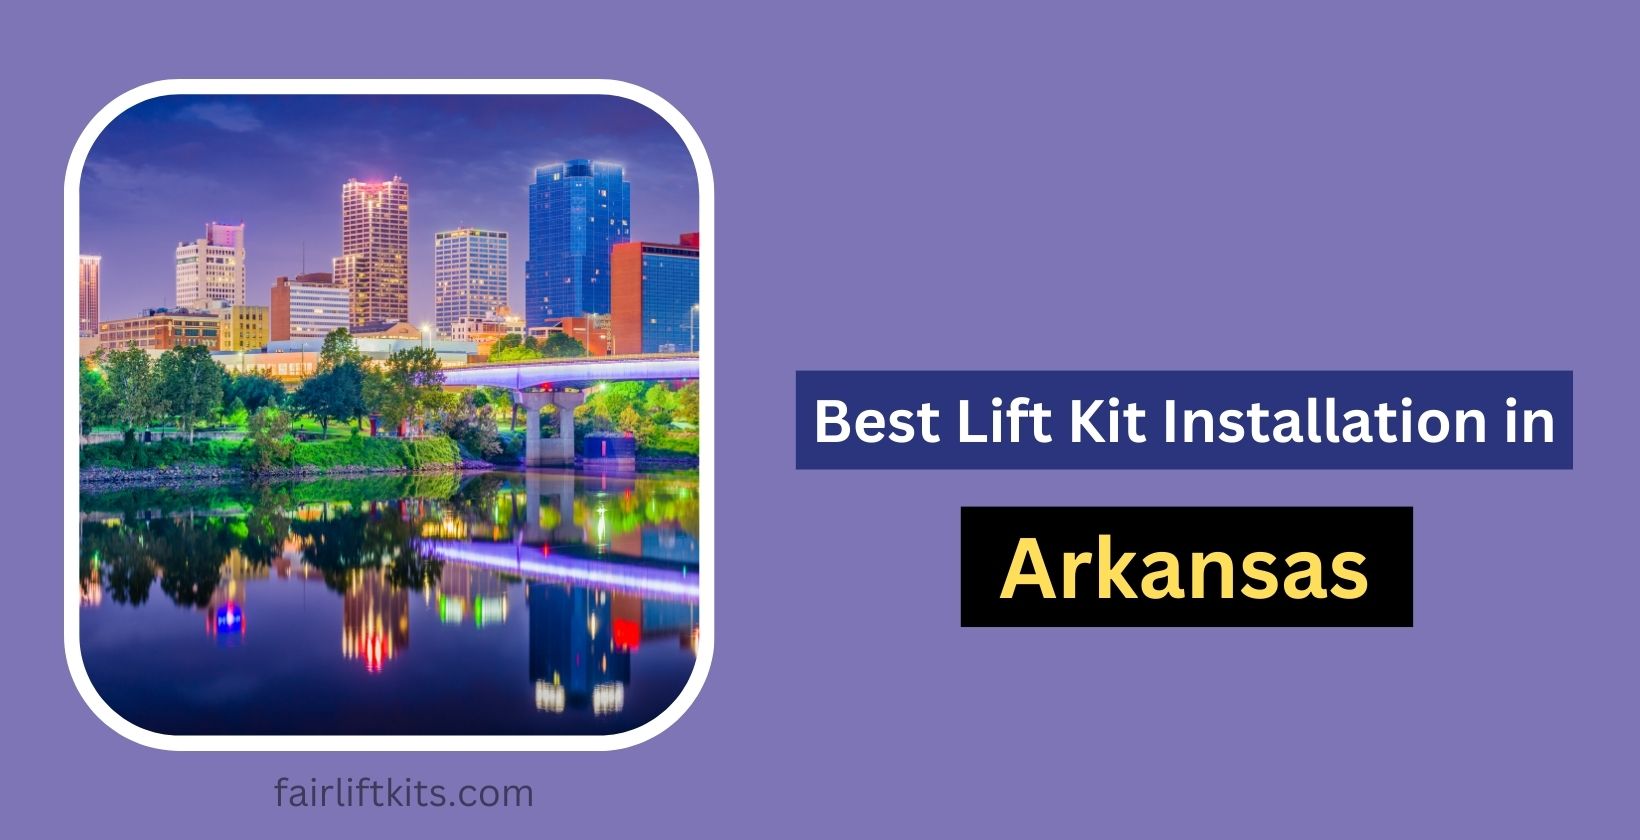 10 Best Lift Kit Installation in Arkansas